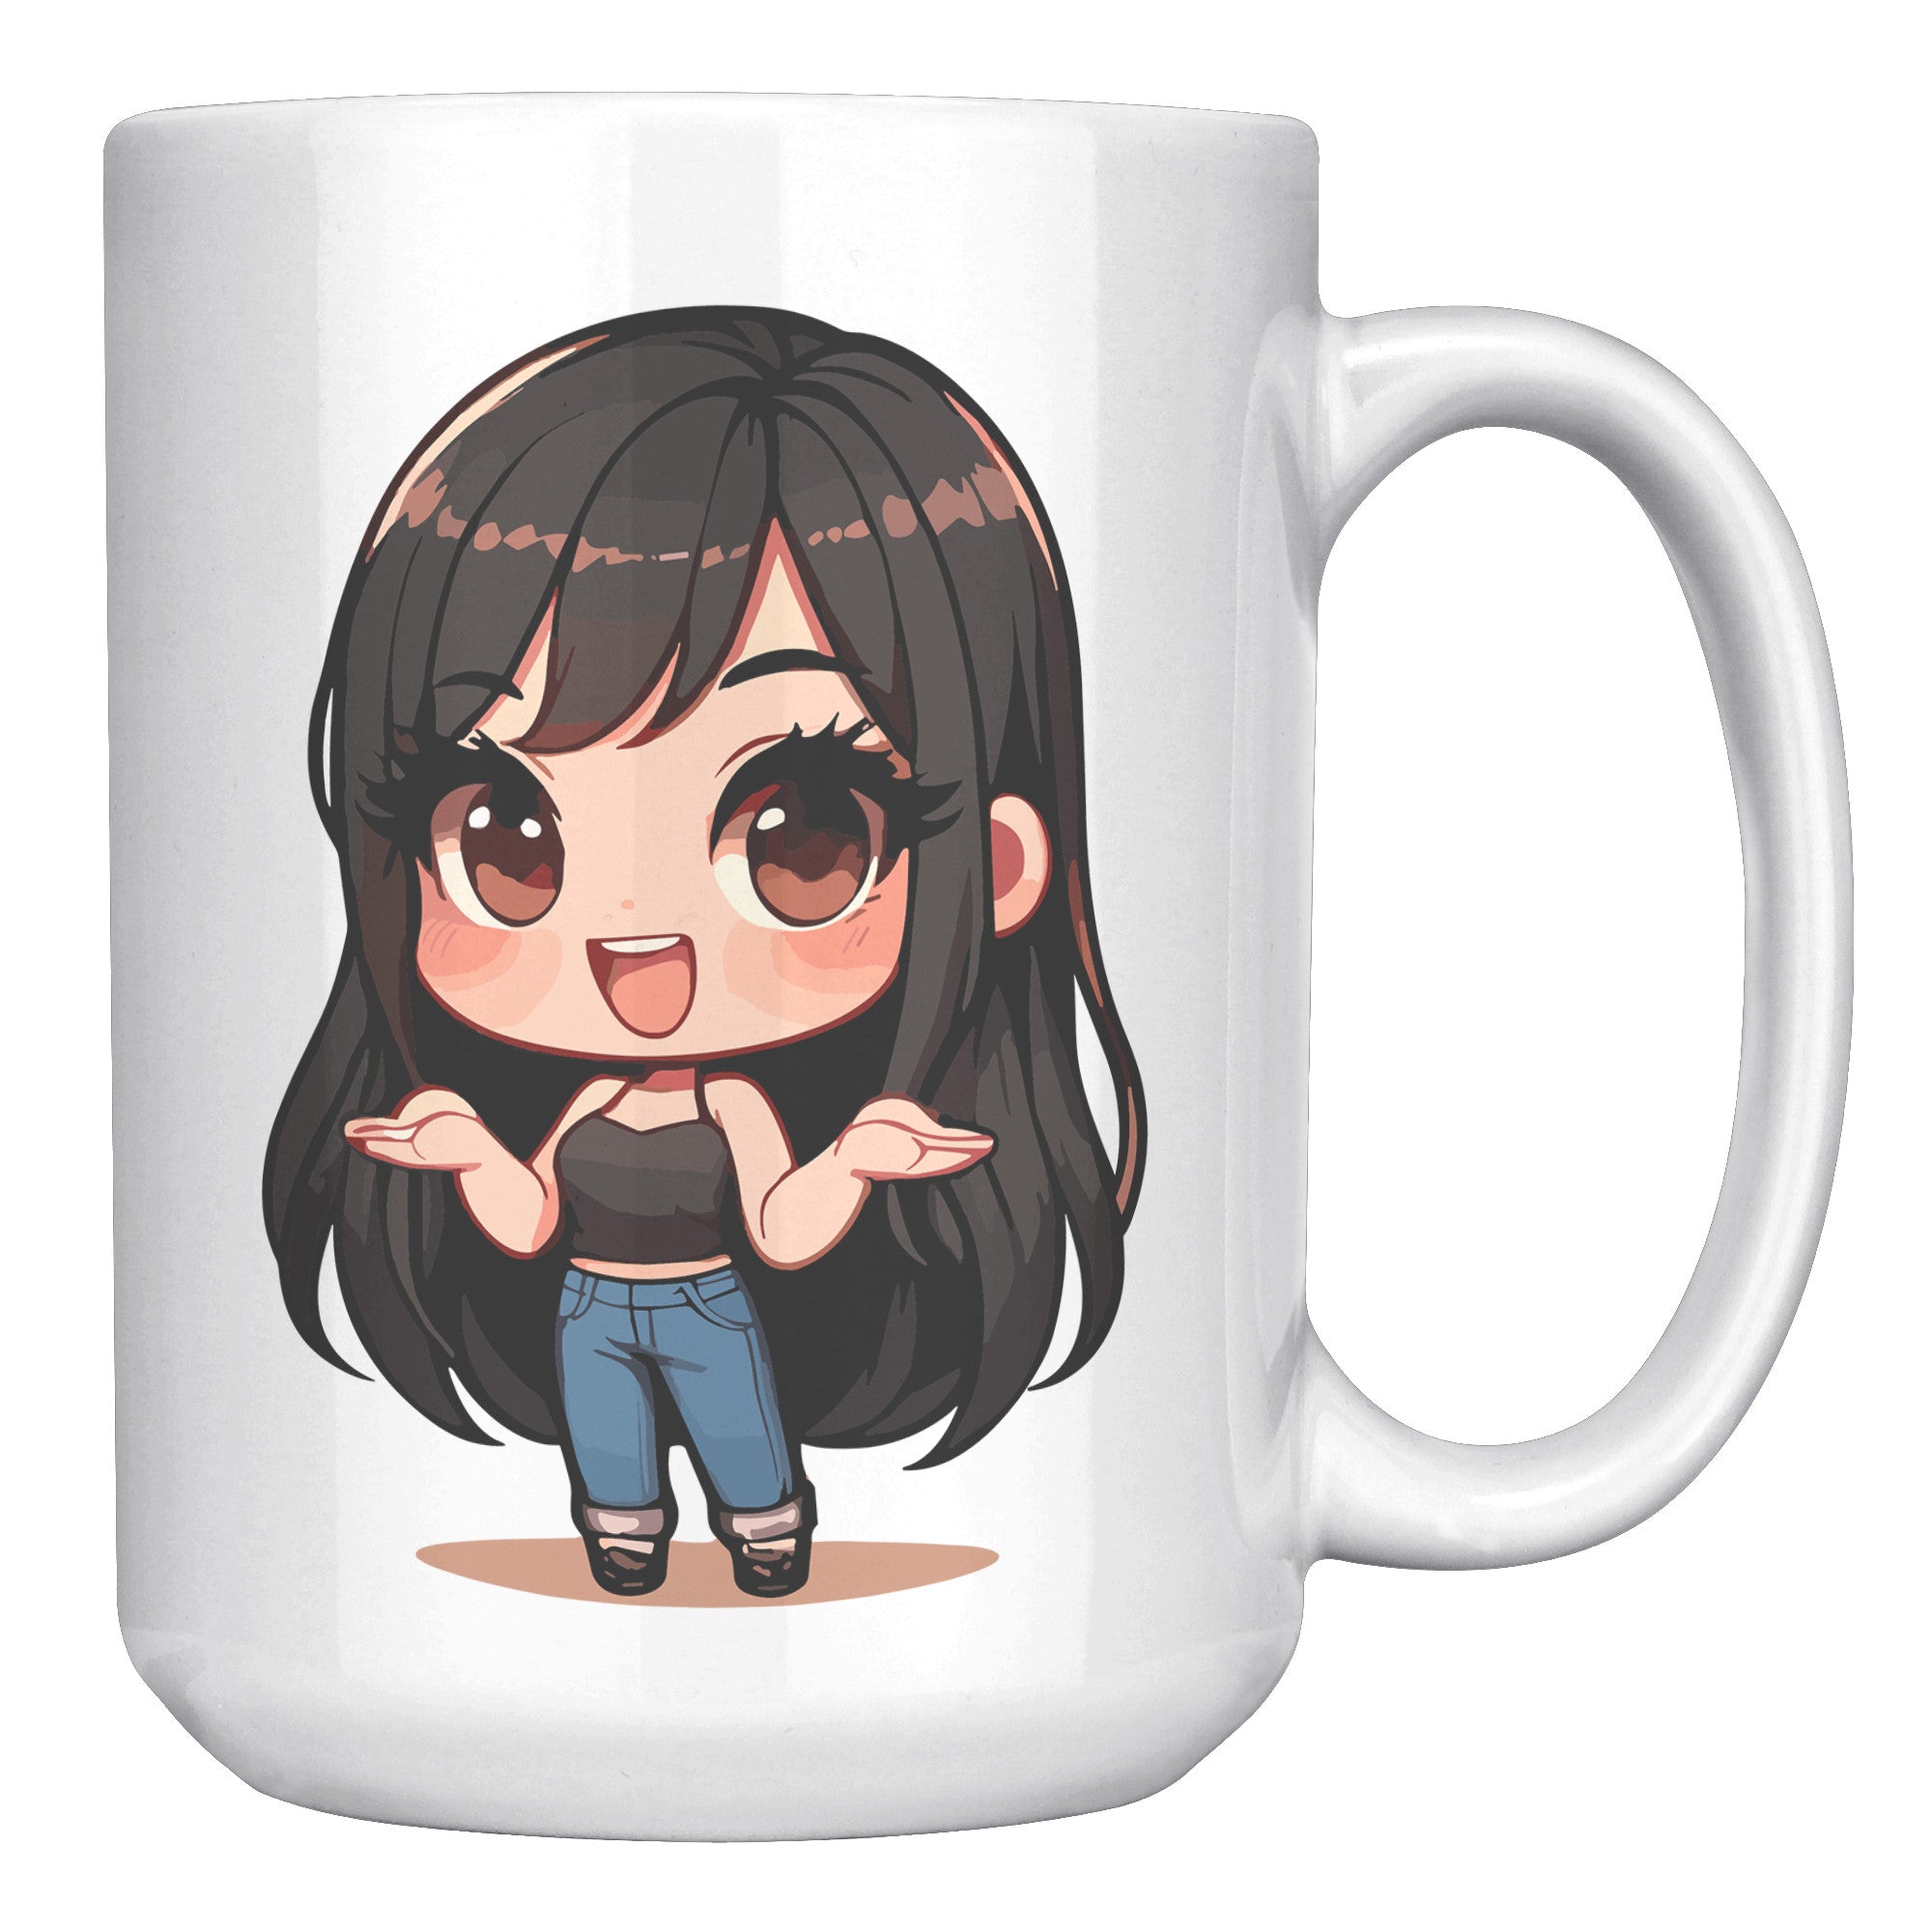 "Marites Gossip Queen Coffee Mug - Cute Cartoon 'Ano Ang Latest?' Cup - Perfect Chismosa Gift - Filipino Slang Tea Mug" - OO1